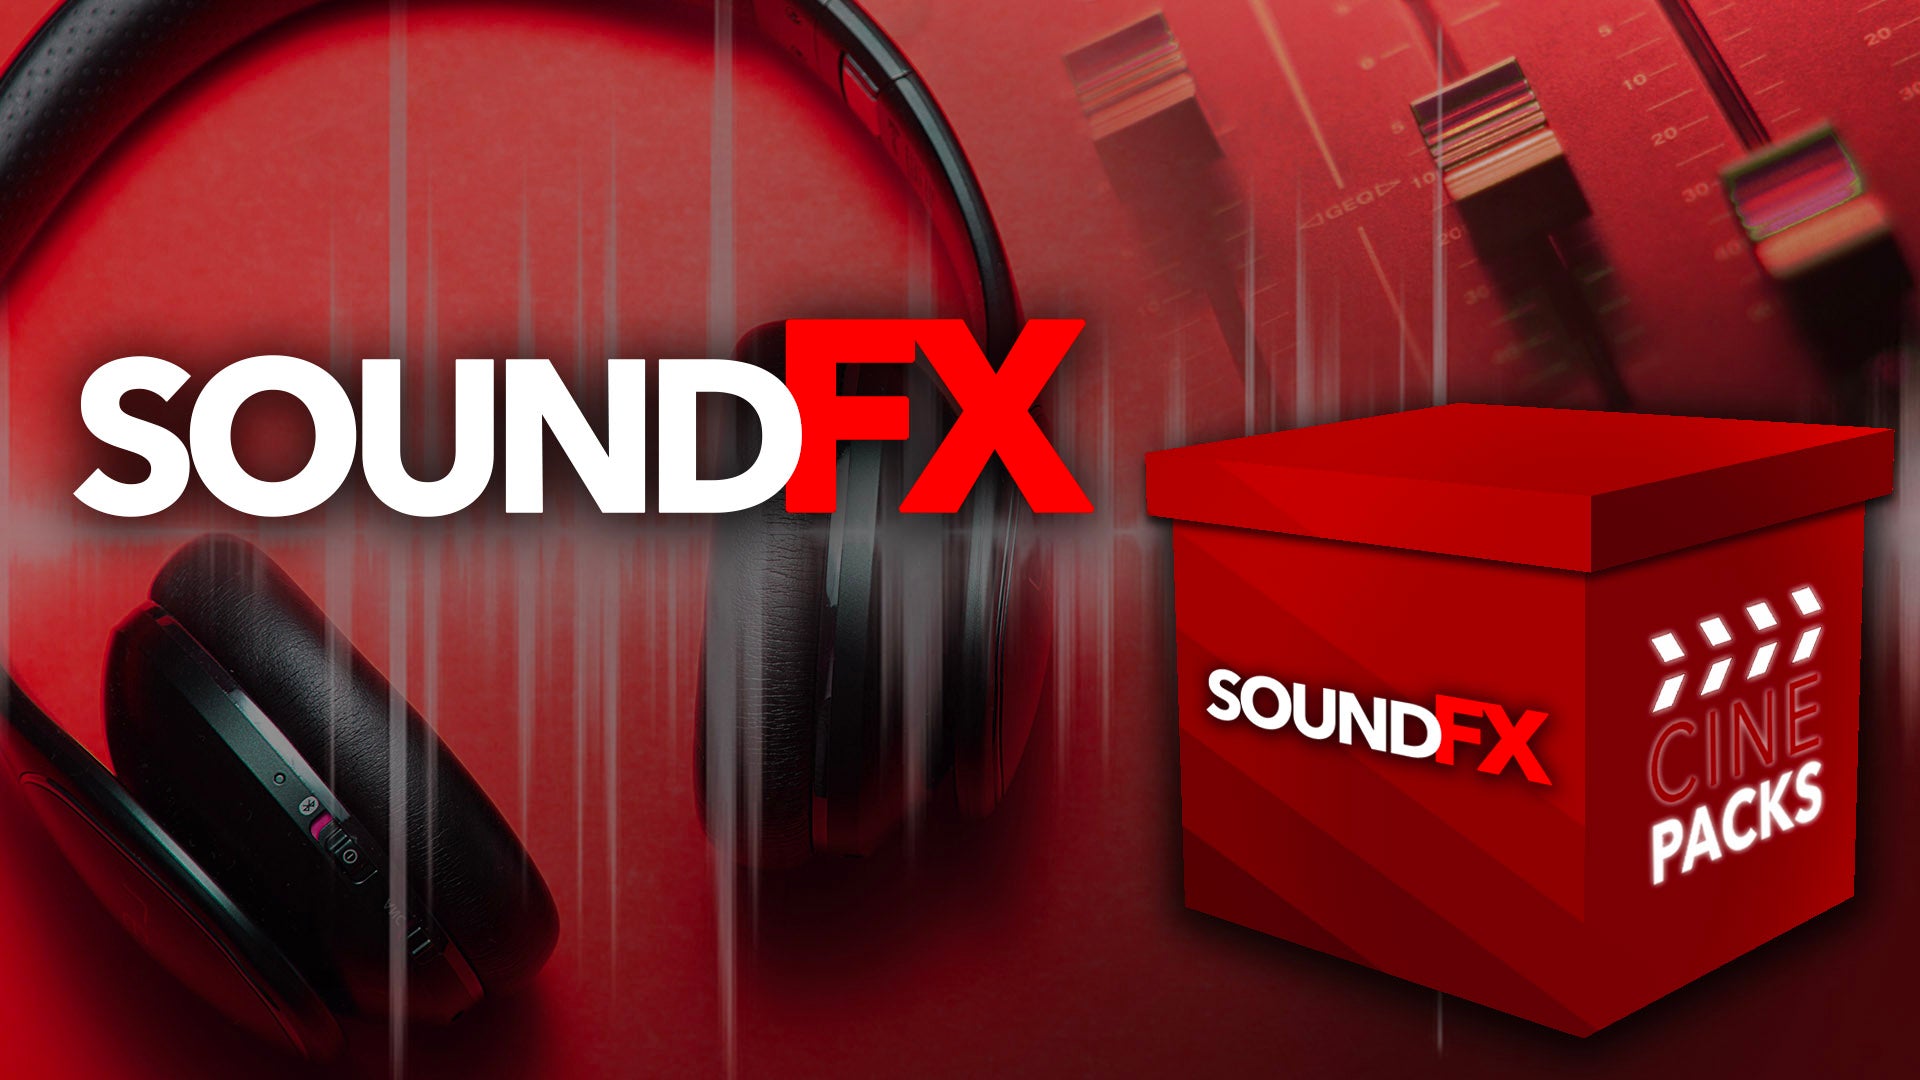 Sound FX - CinePacks